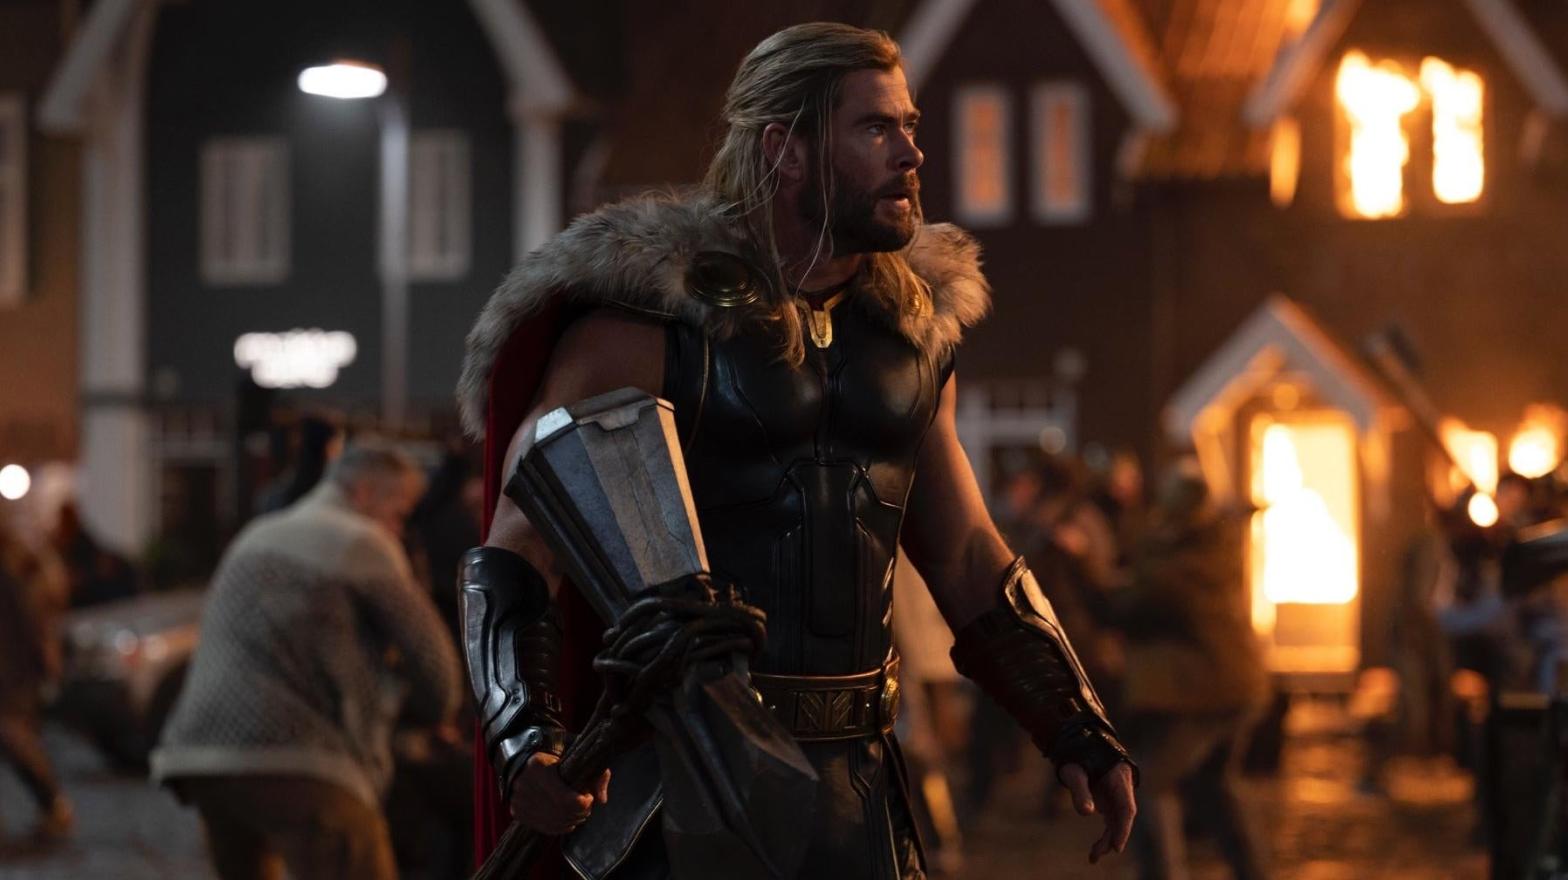 Chris Hemsworth has seen Thor go through a lot. (Image: Marvel Studios)